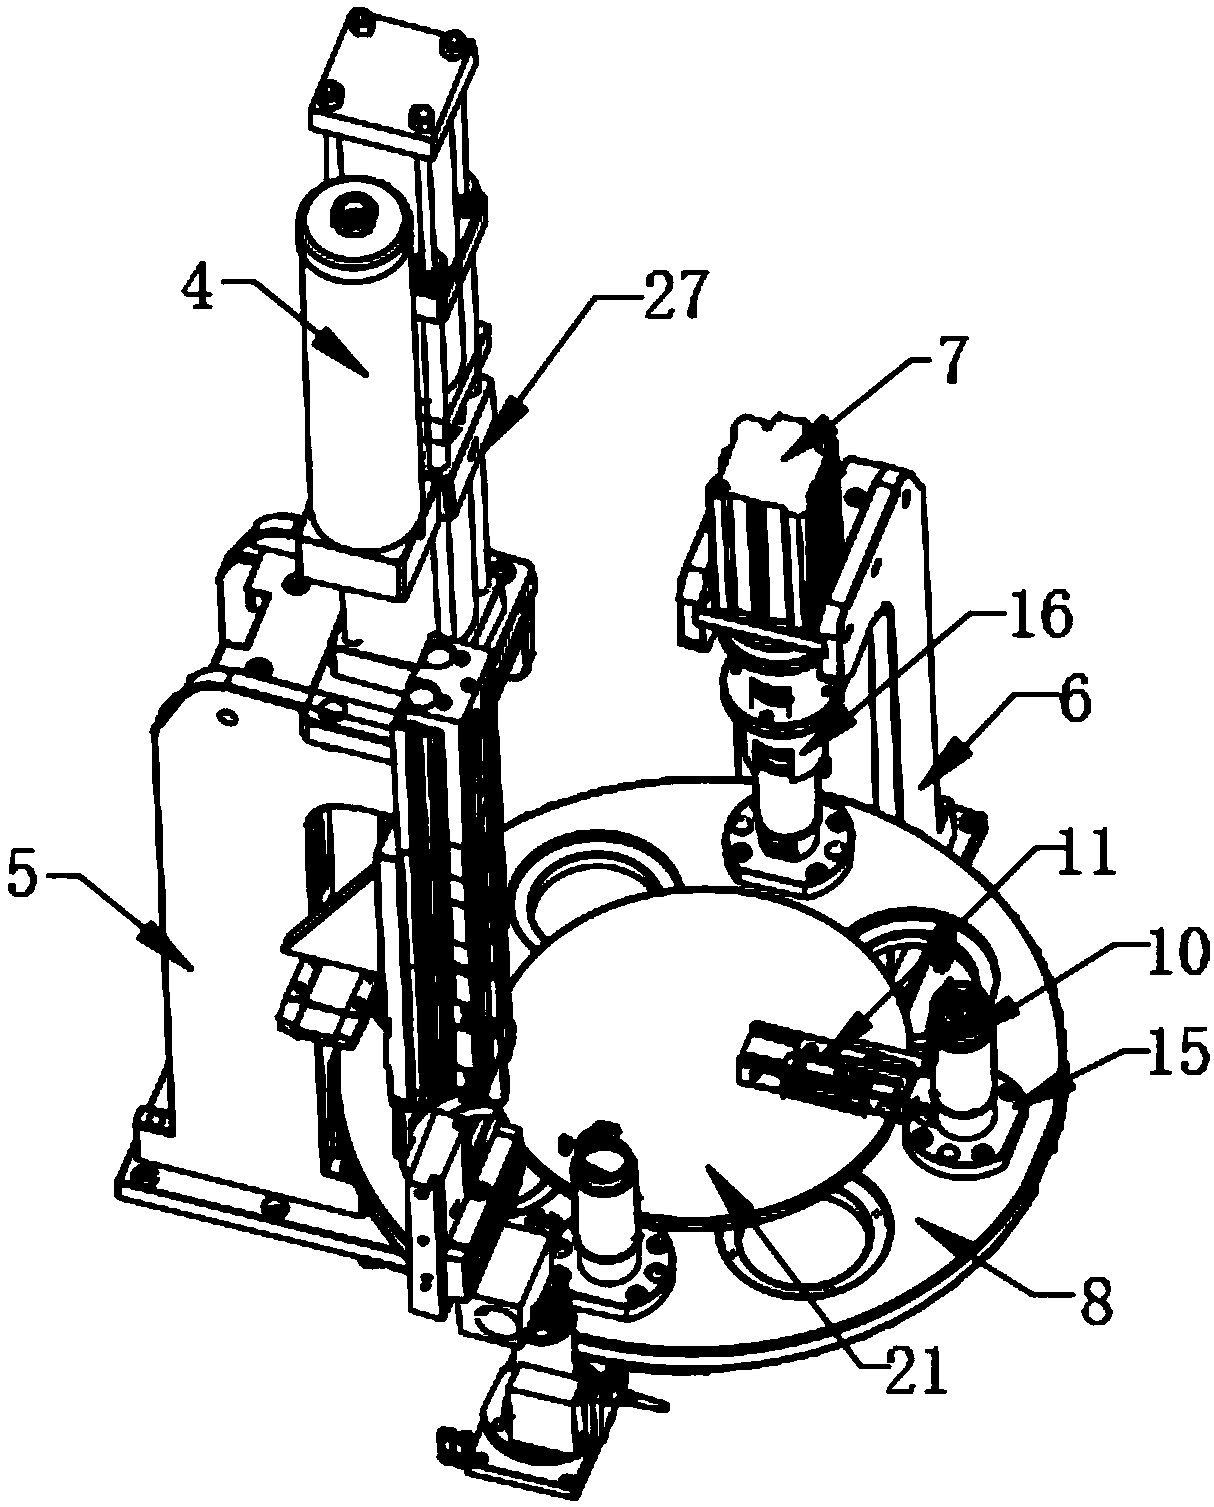 Press mounting equipment for pump core assembling